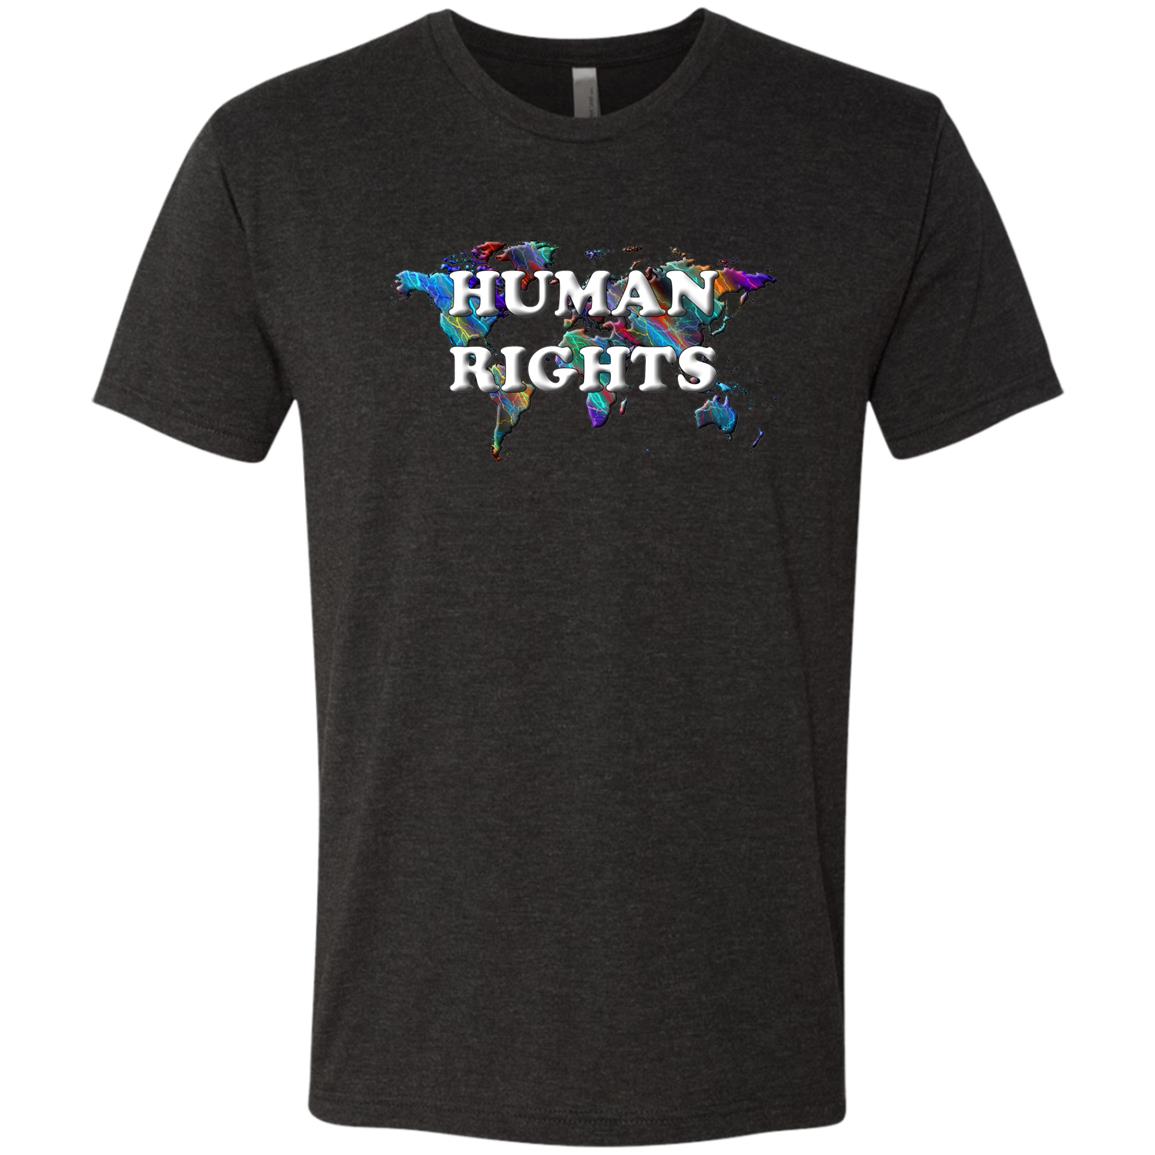 HUMAN RIGHTS STATEMENT T-SHIRT